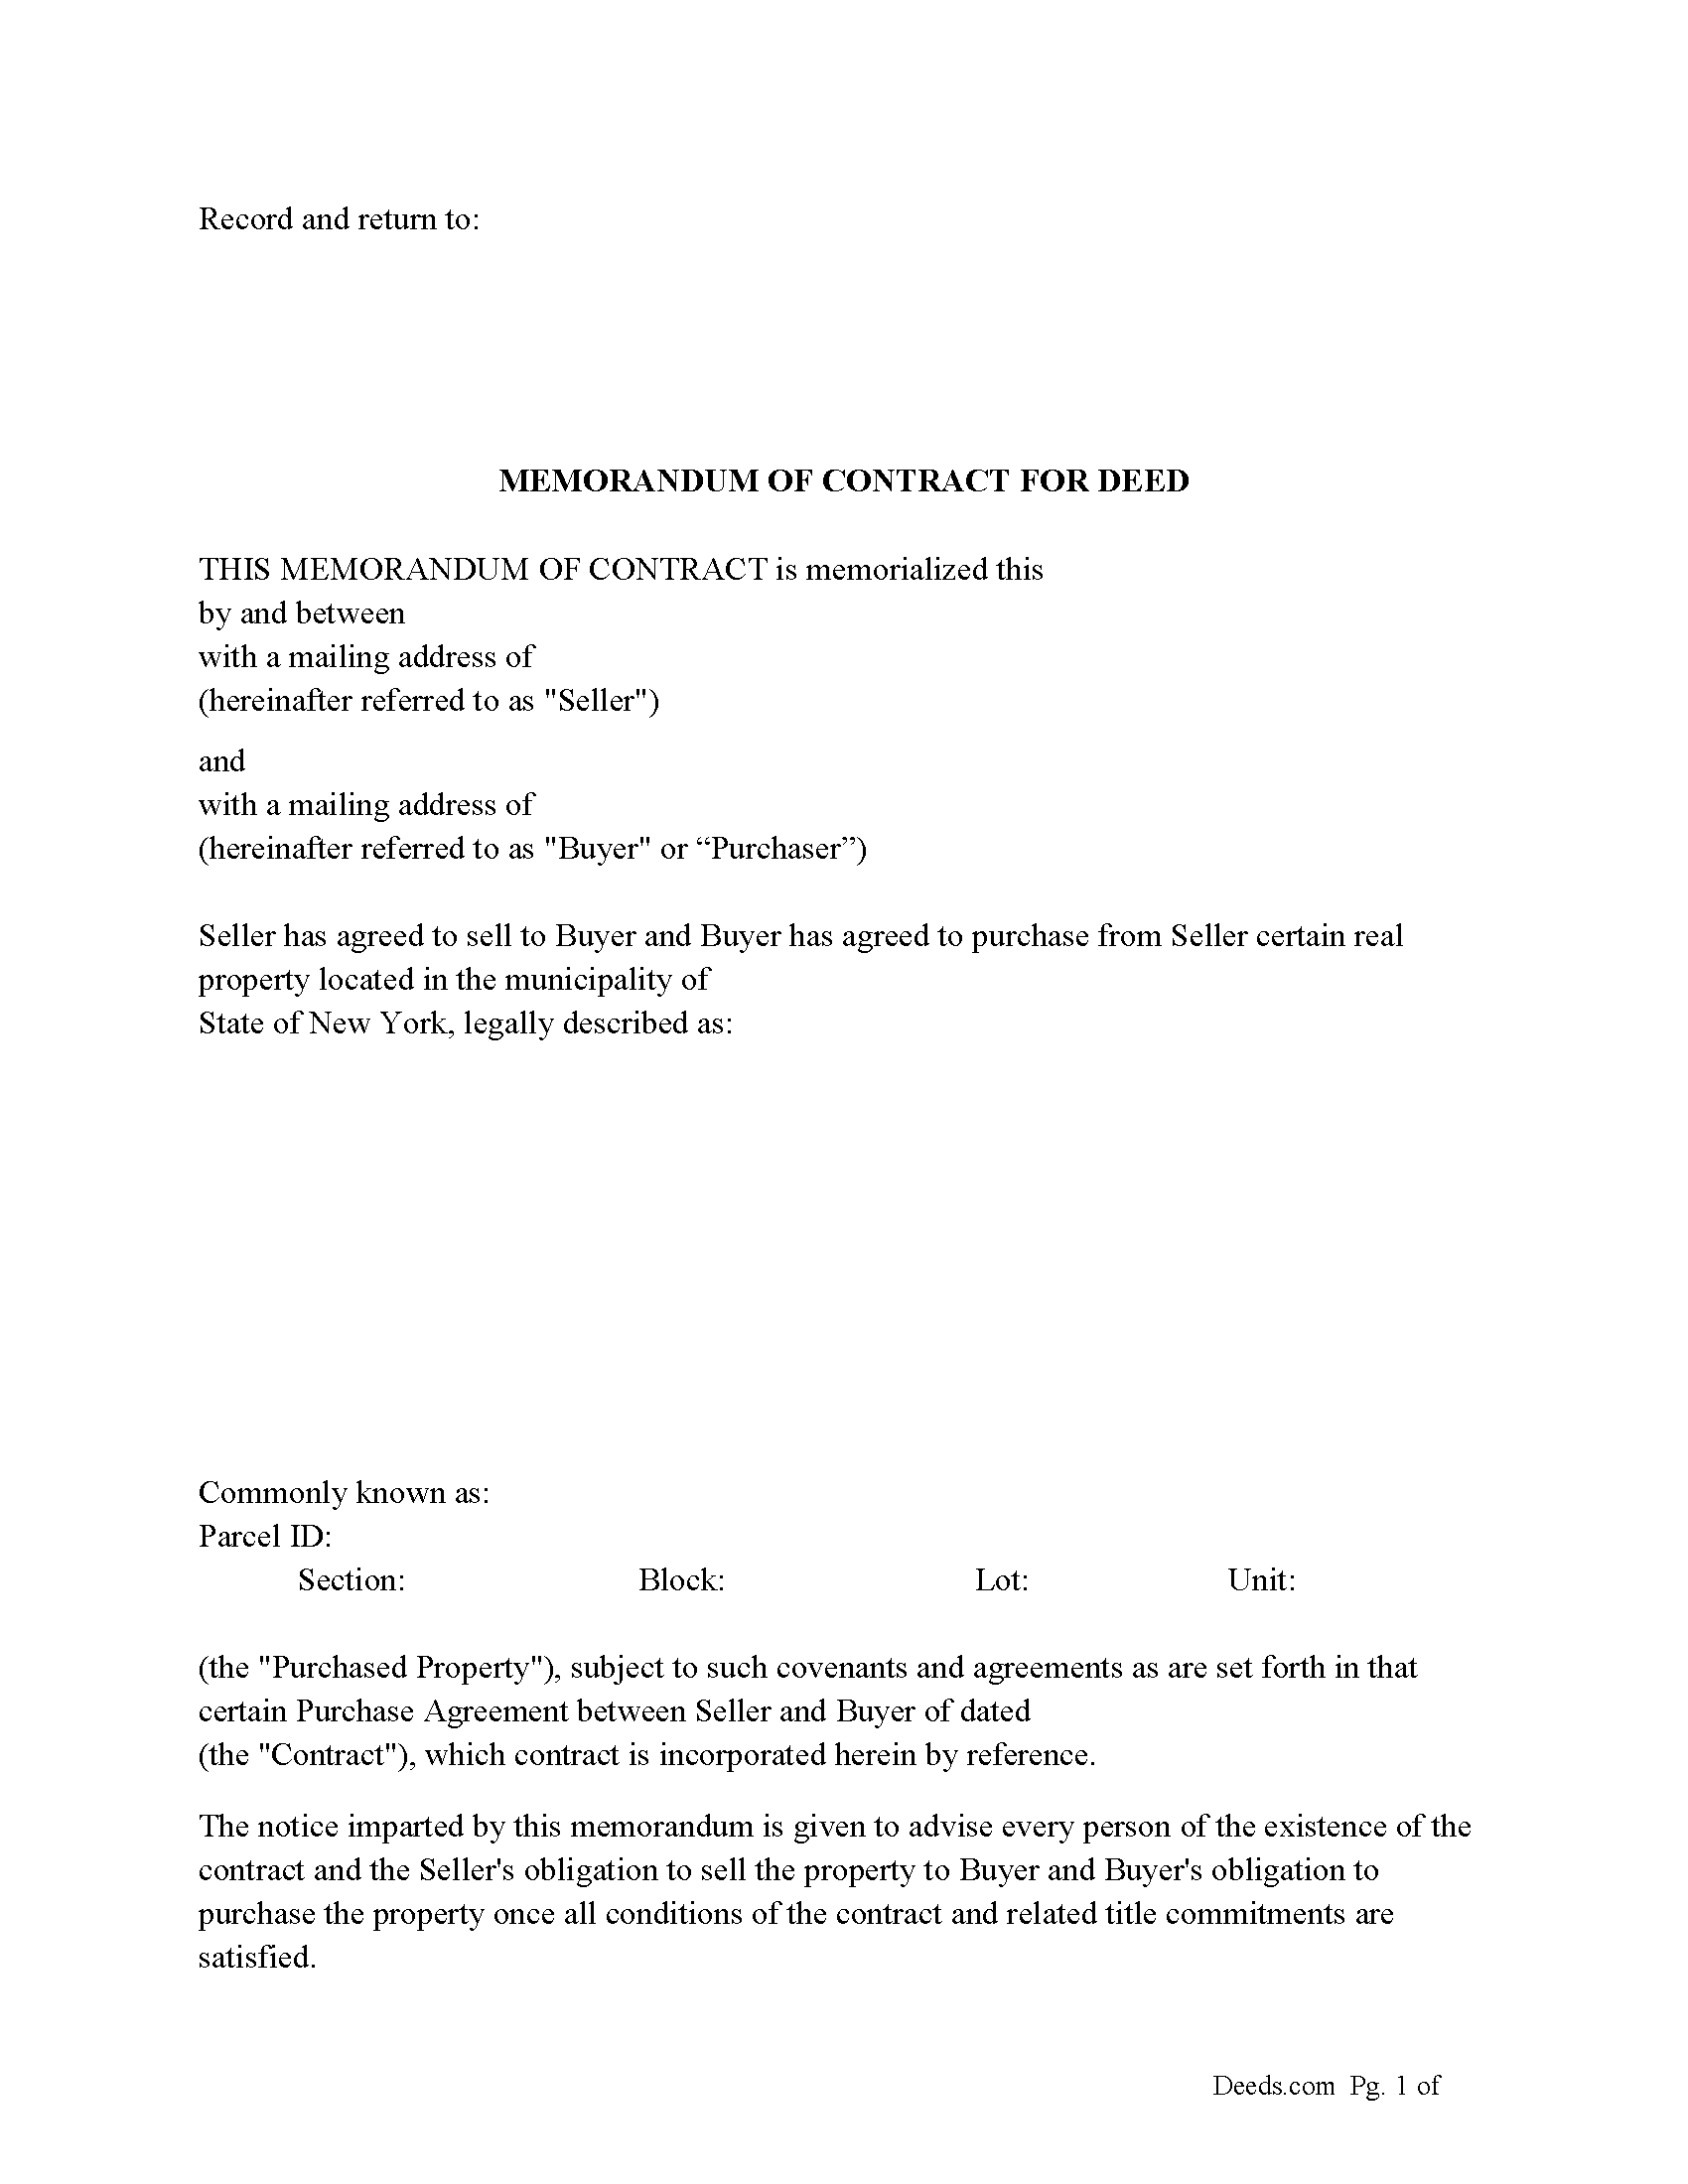 Hamilton County Memorandum of Contract for Deed Form